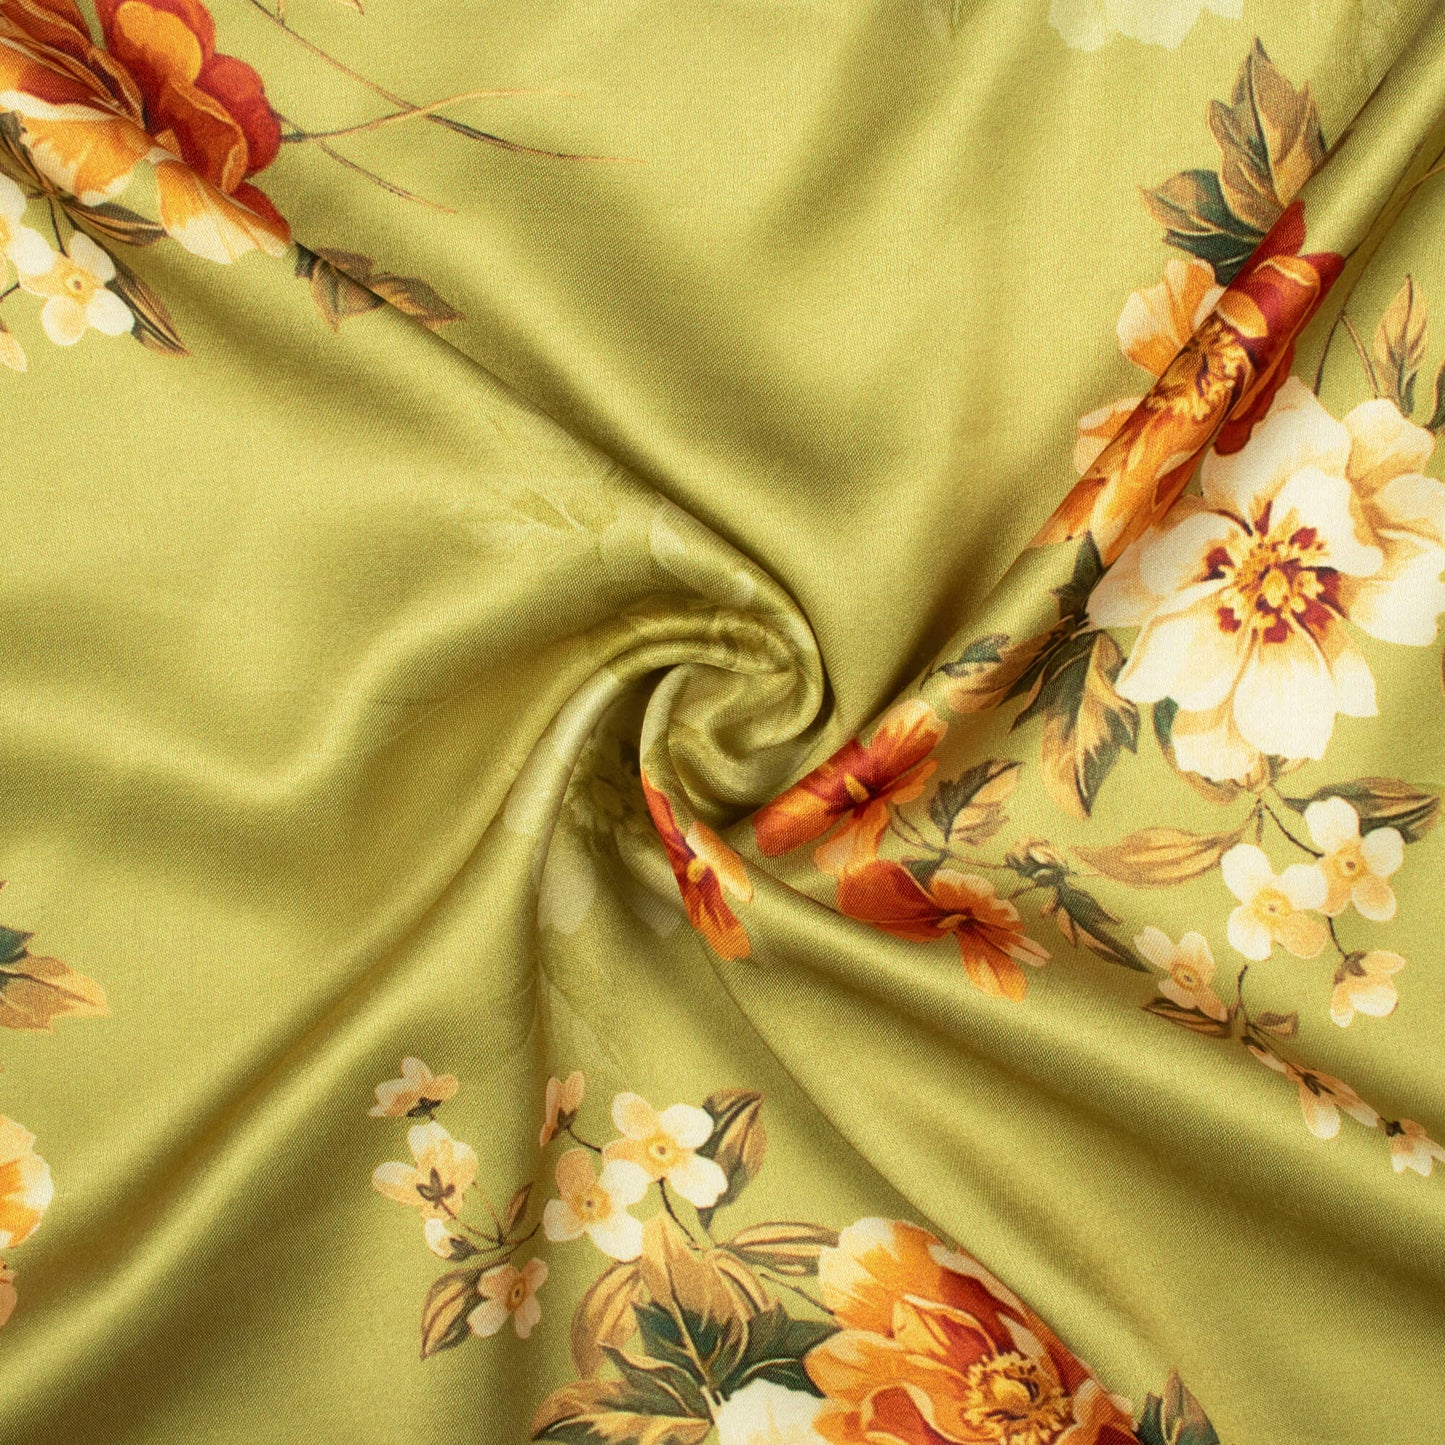 Moss Green And Spice Orange Floral Pattern Digital Print Premium Lush Satin Fabric